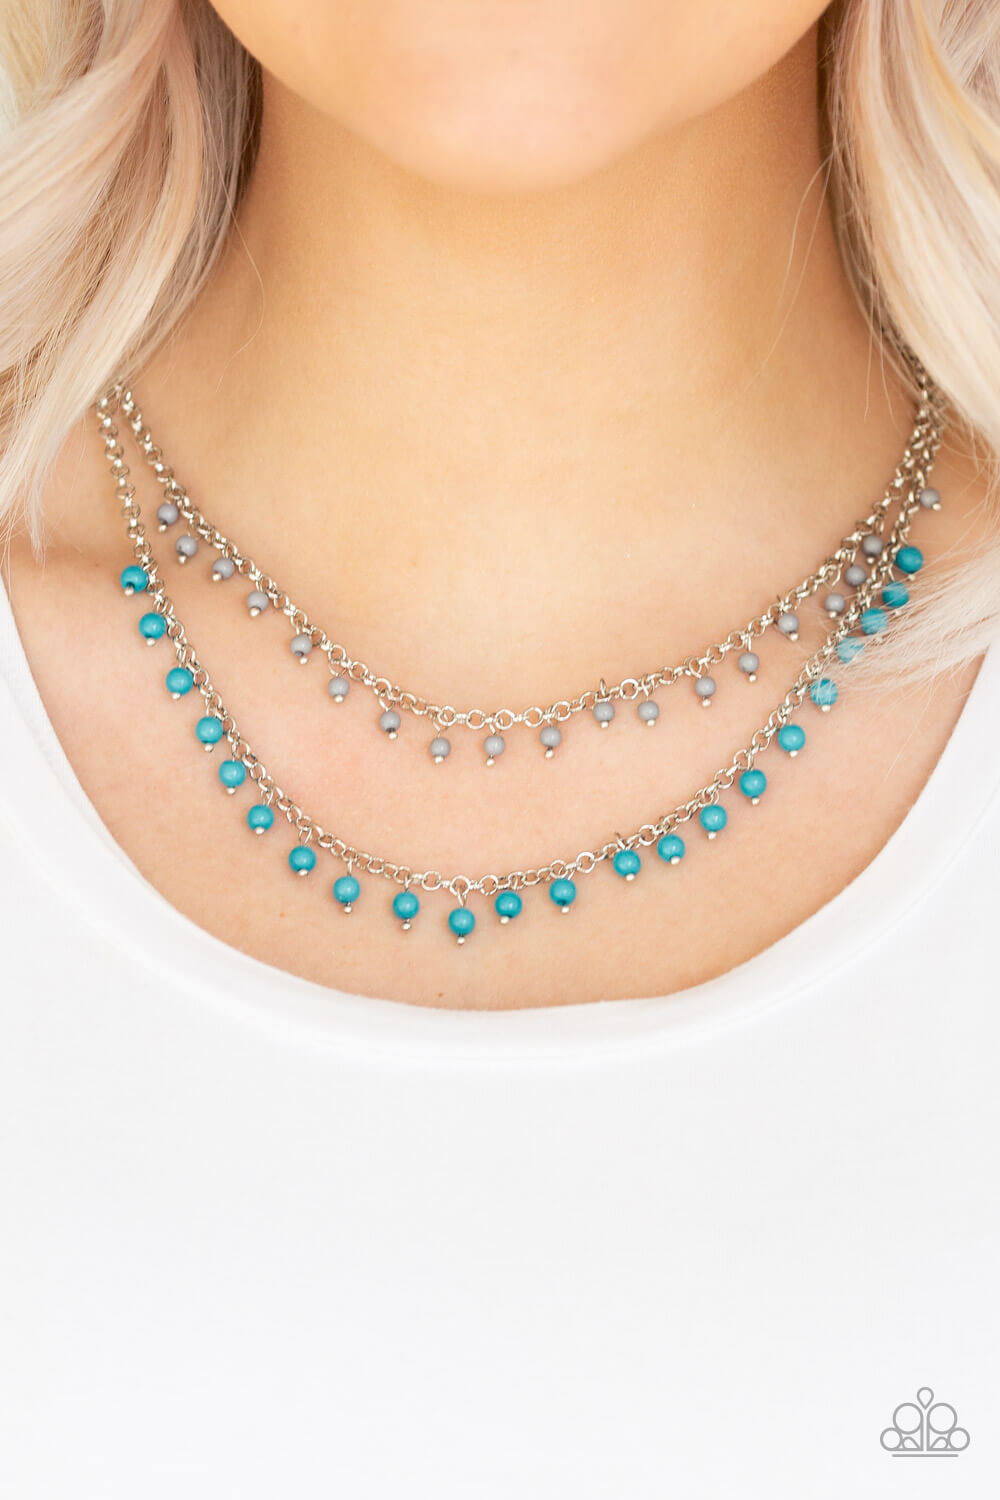 Dainty Distraction - Blue Necklace Set - Princess Glam Shop